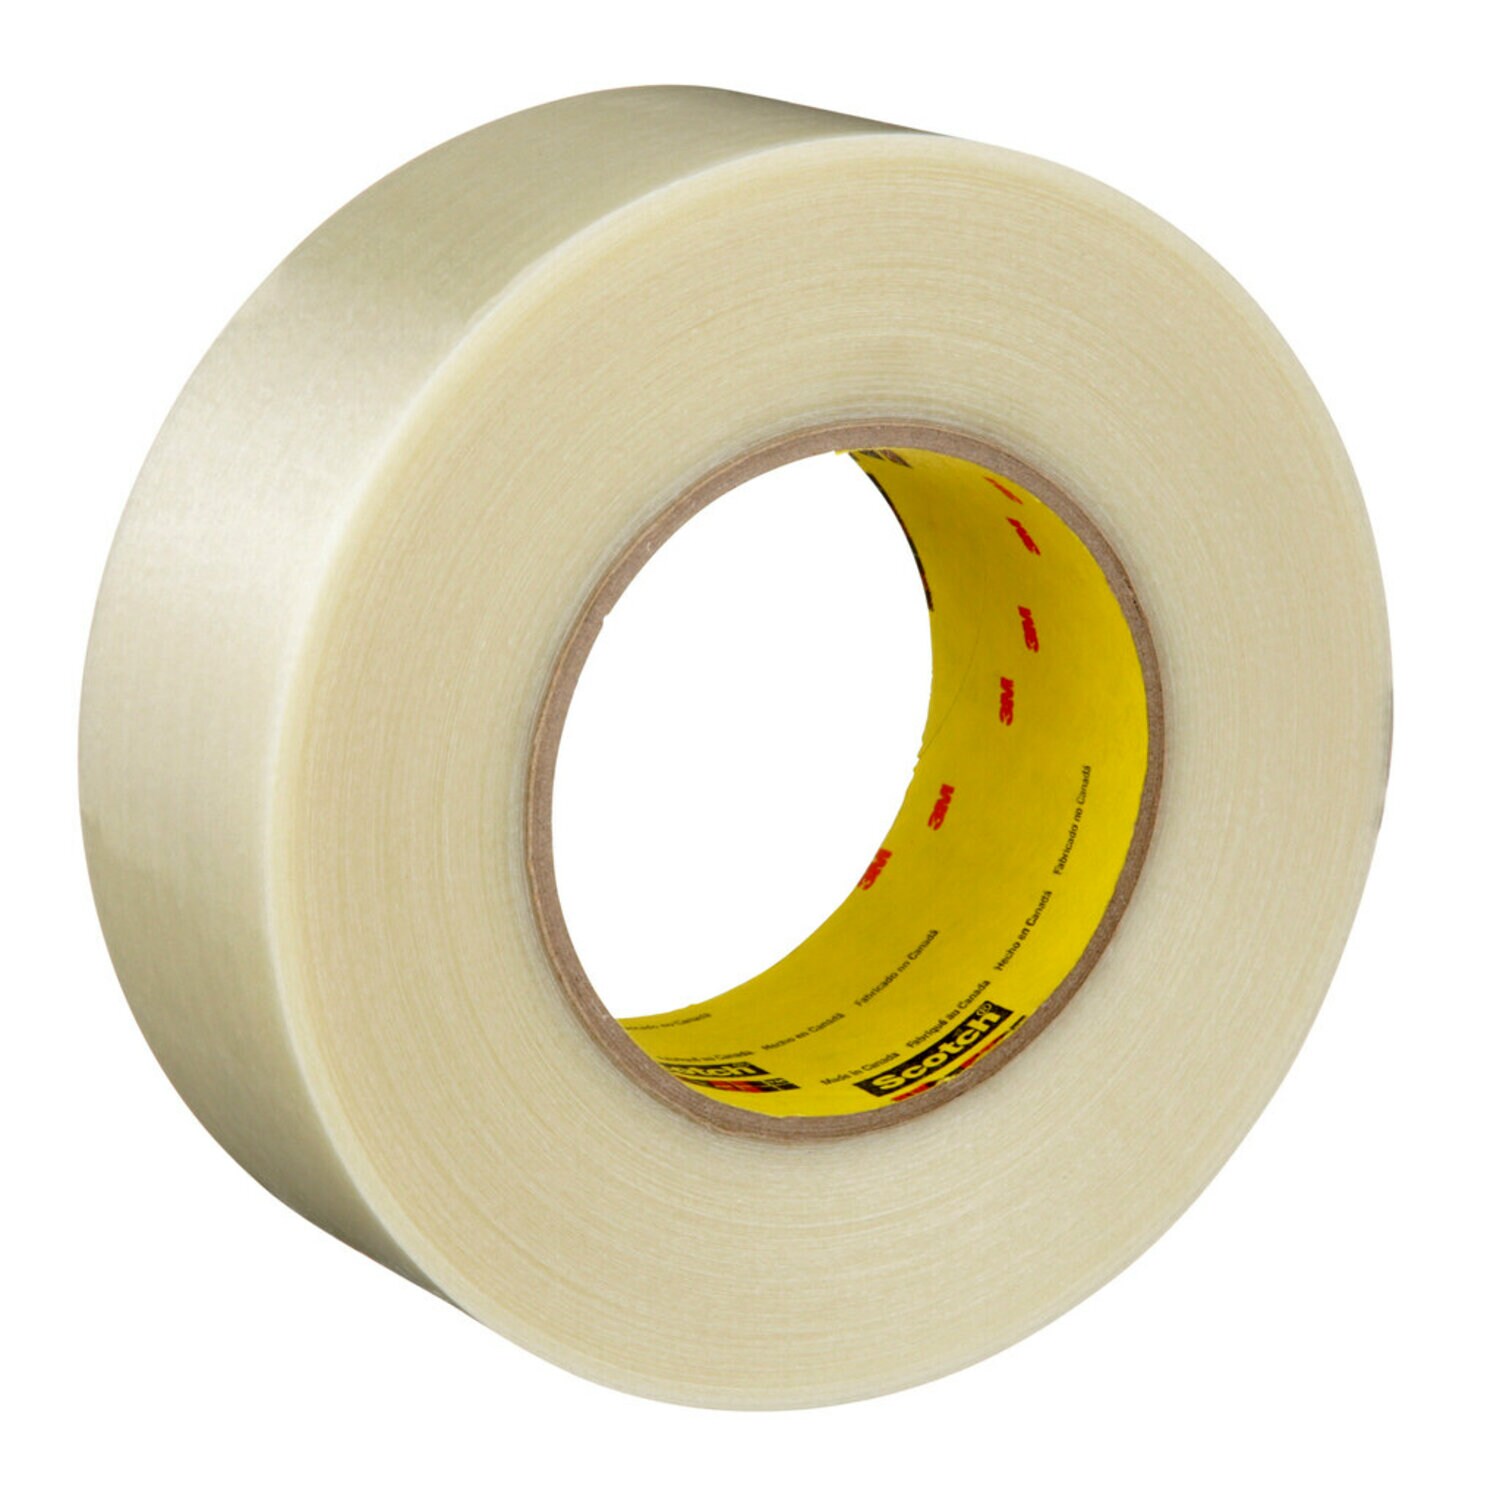 7000124622 - Scotch Filament Tape 8919MSR, Clear, 48 mm x 55 m, 7 mil, 24 rolls per
case